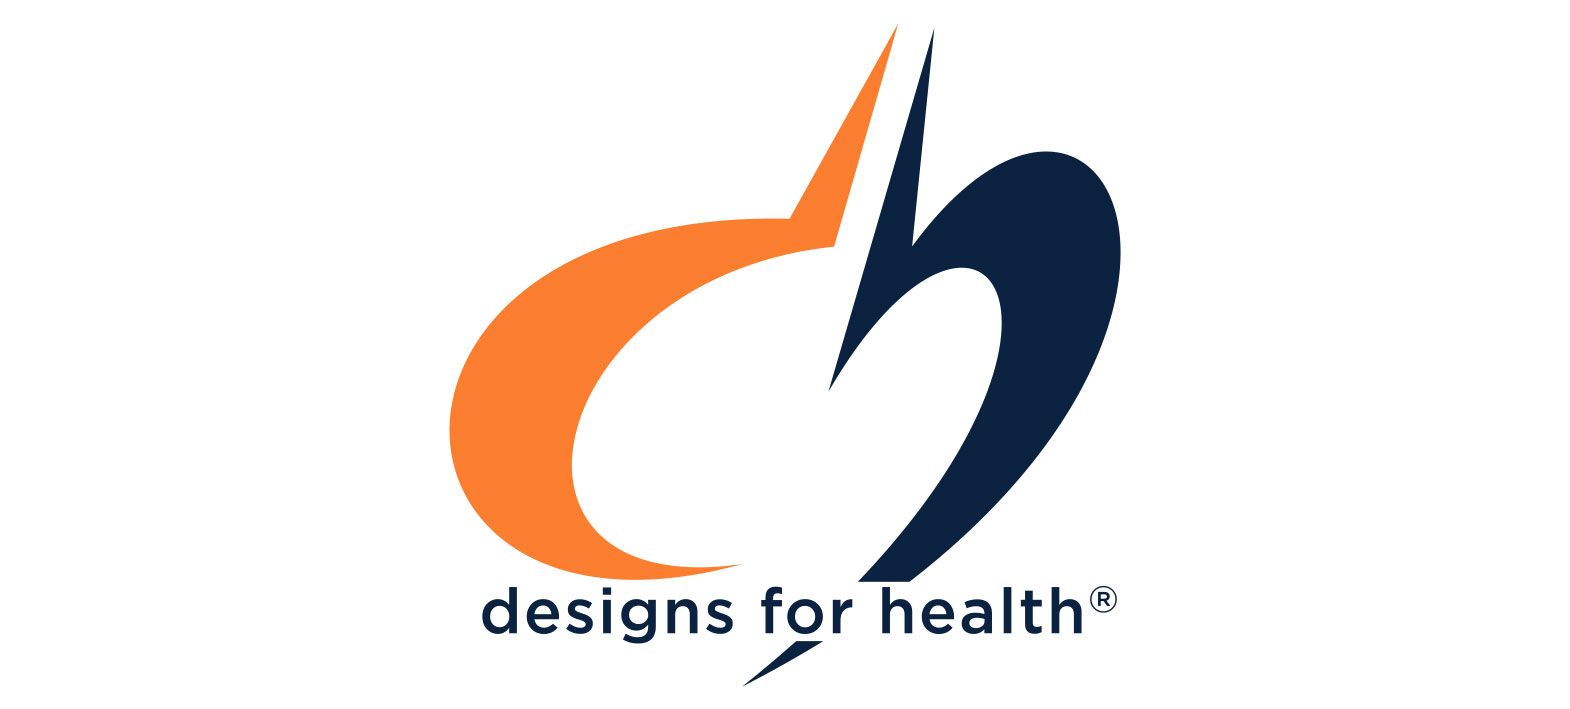 Design For Health